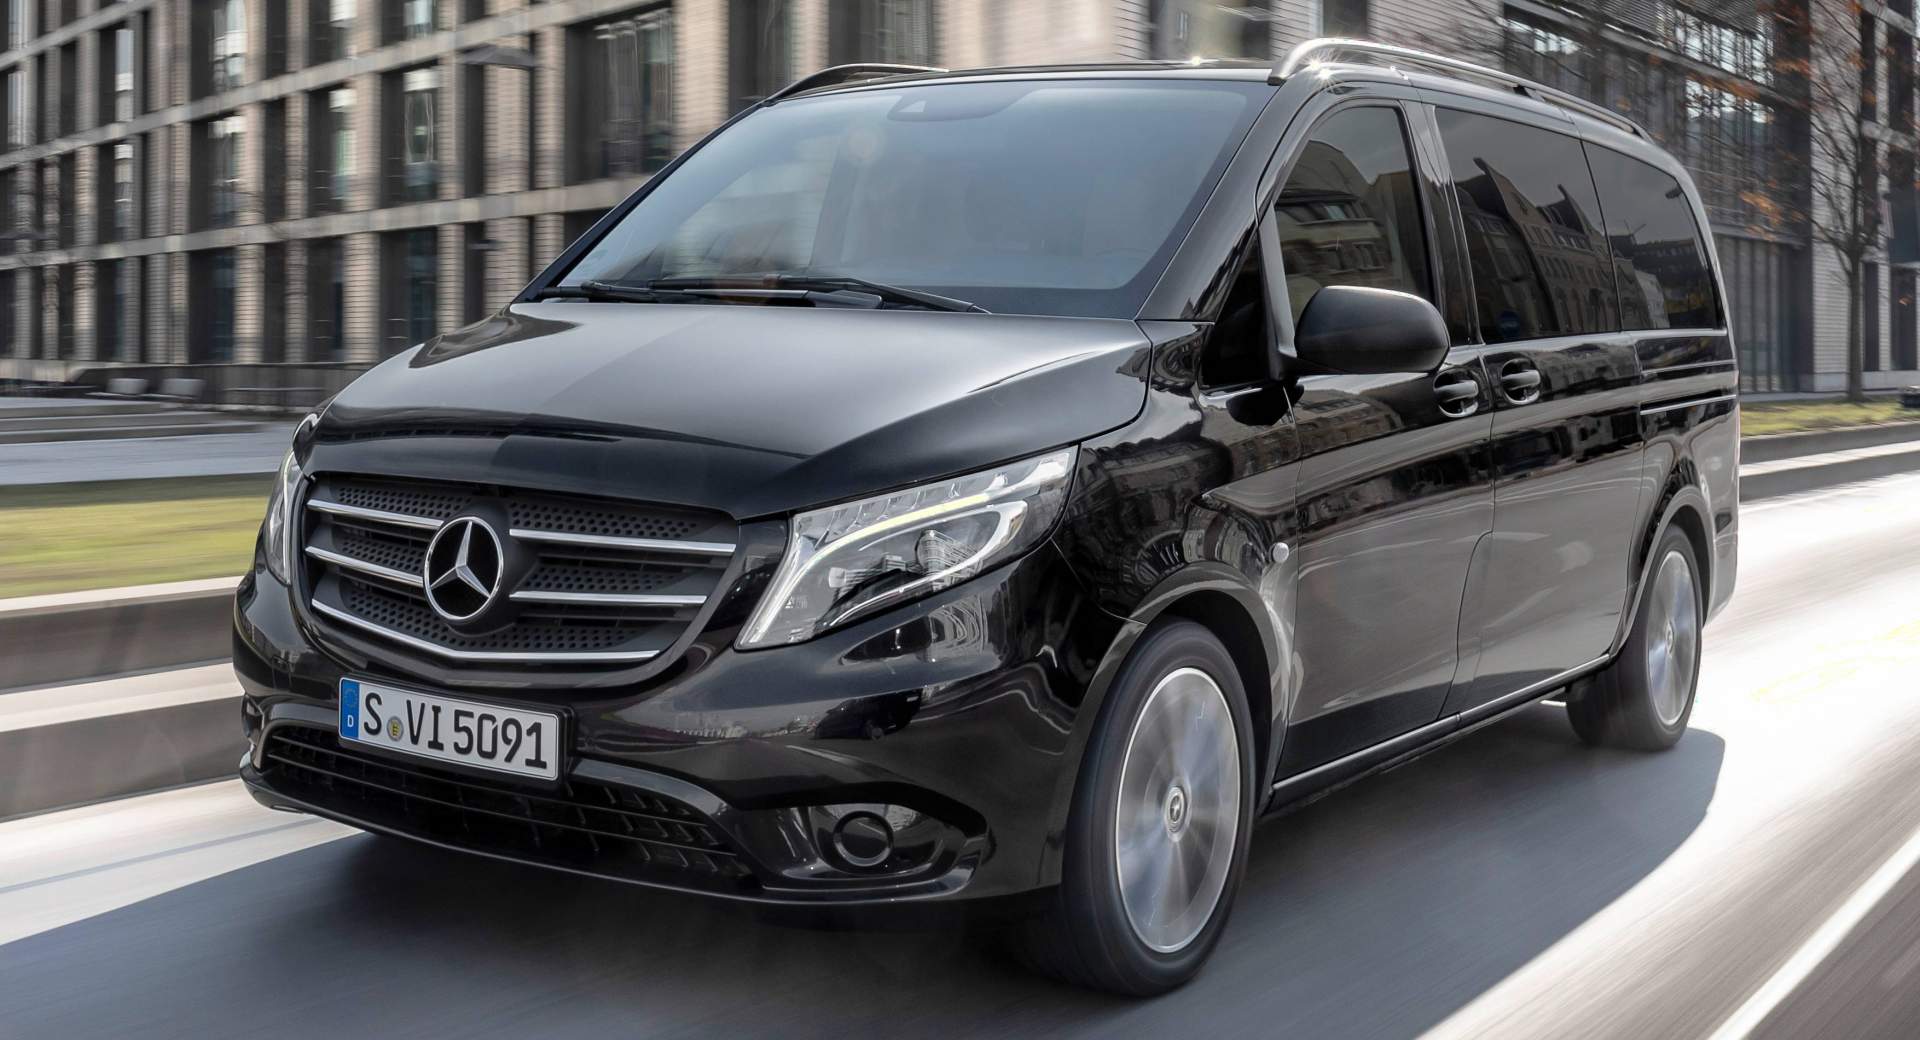 2019 Mercedes Vito Gains Om 654 Diesel From Passenger Car